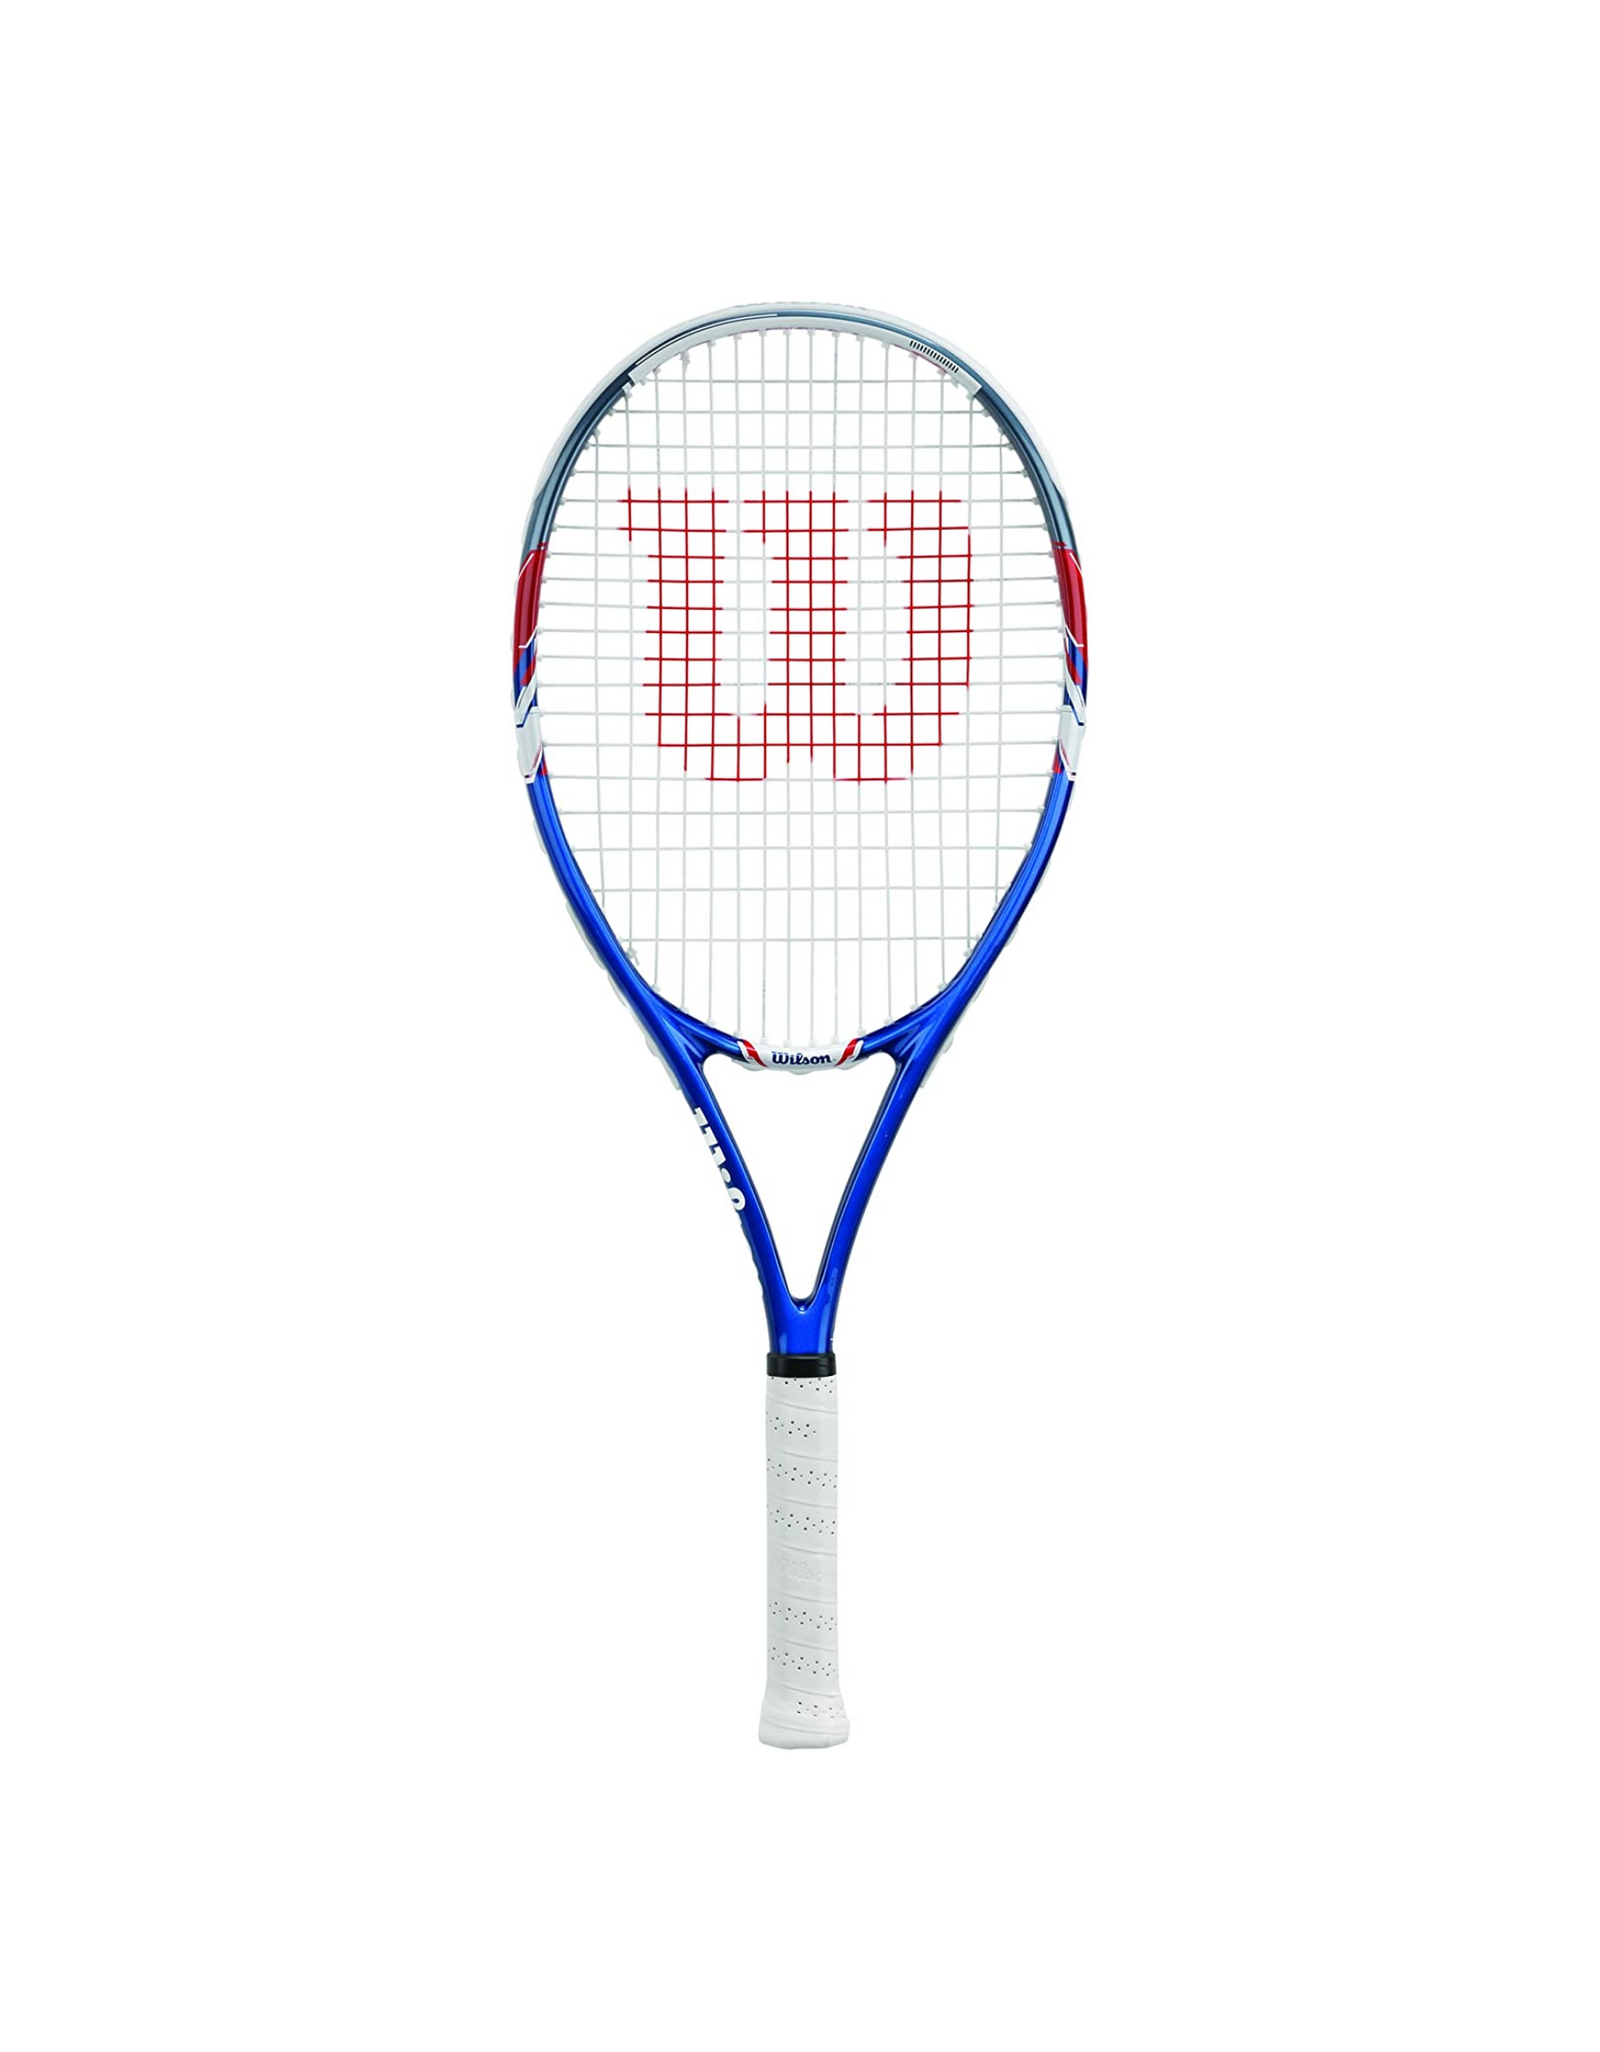 Shop Tennis Racket Grips